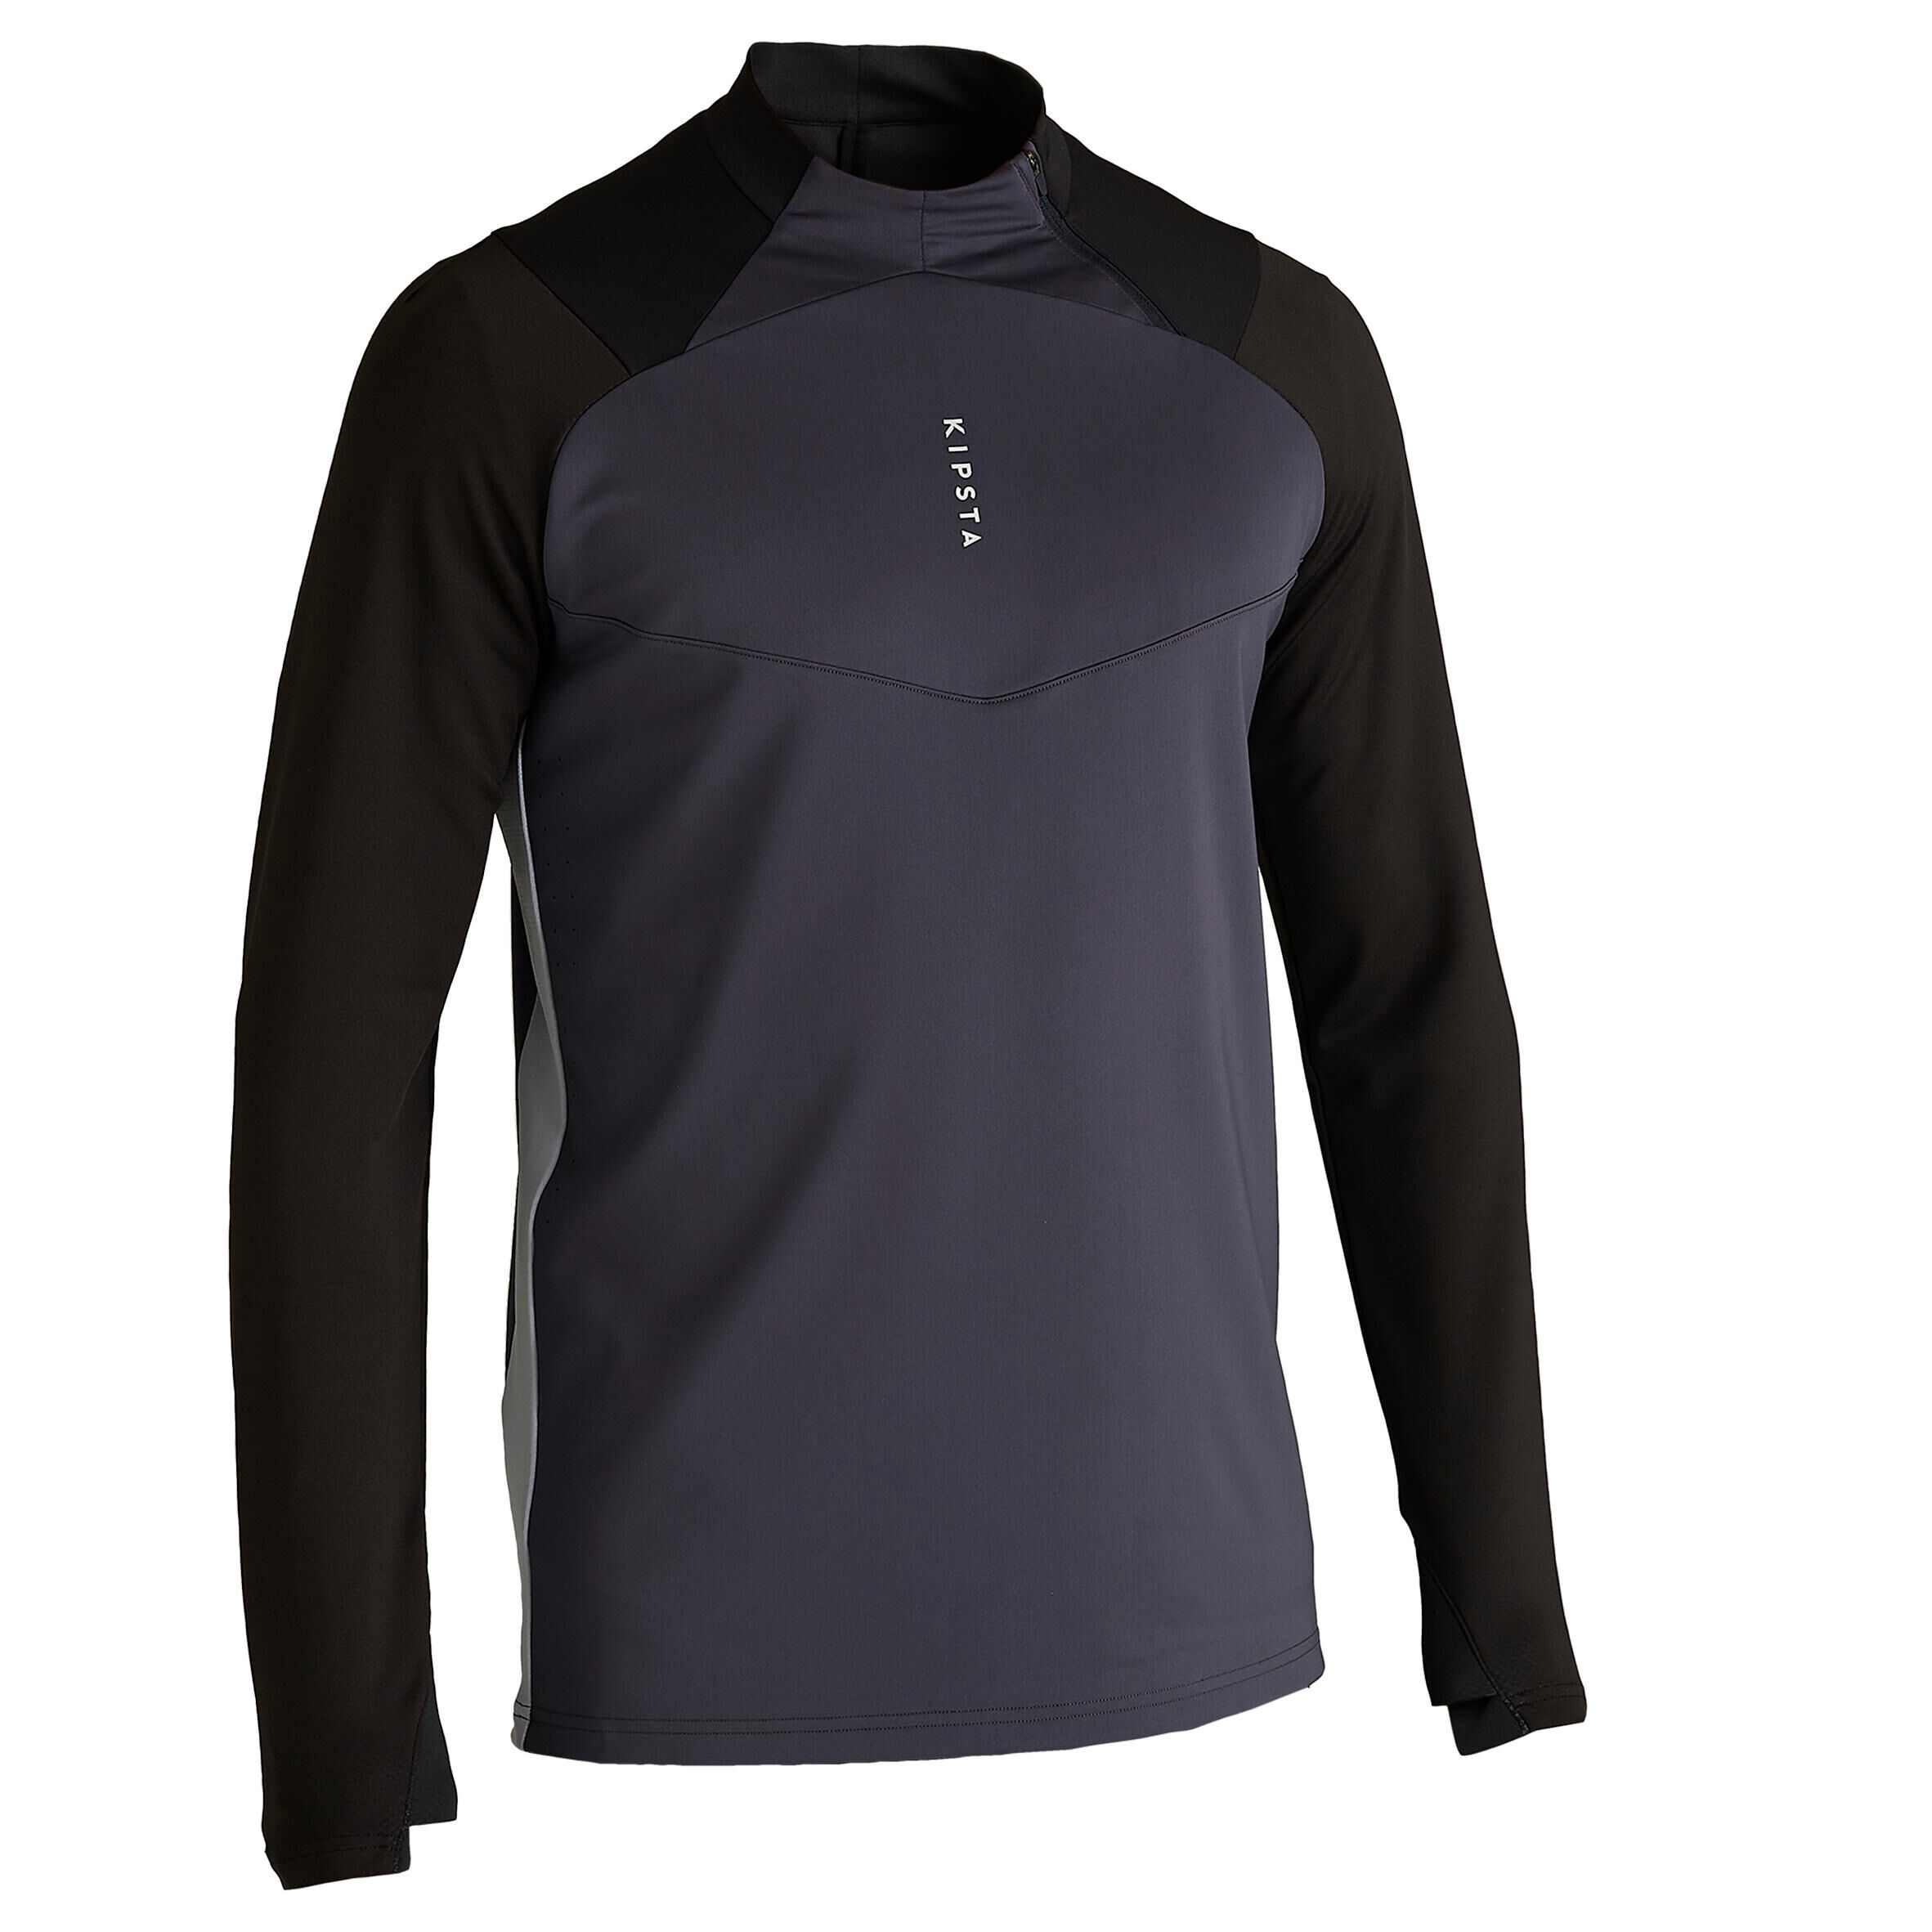 KIPSTA T500 Adult 1/2 Zip Football Training Sweatshirt - Carbon Black